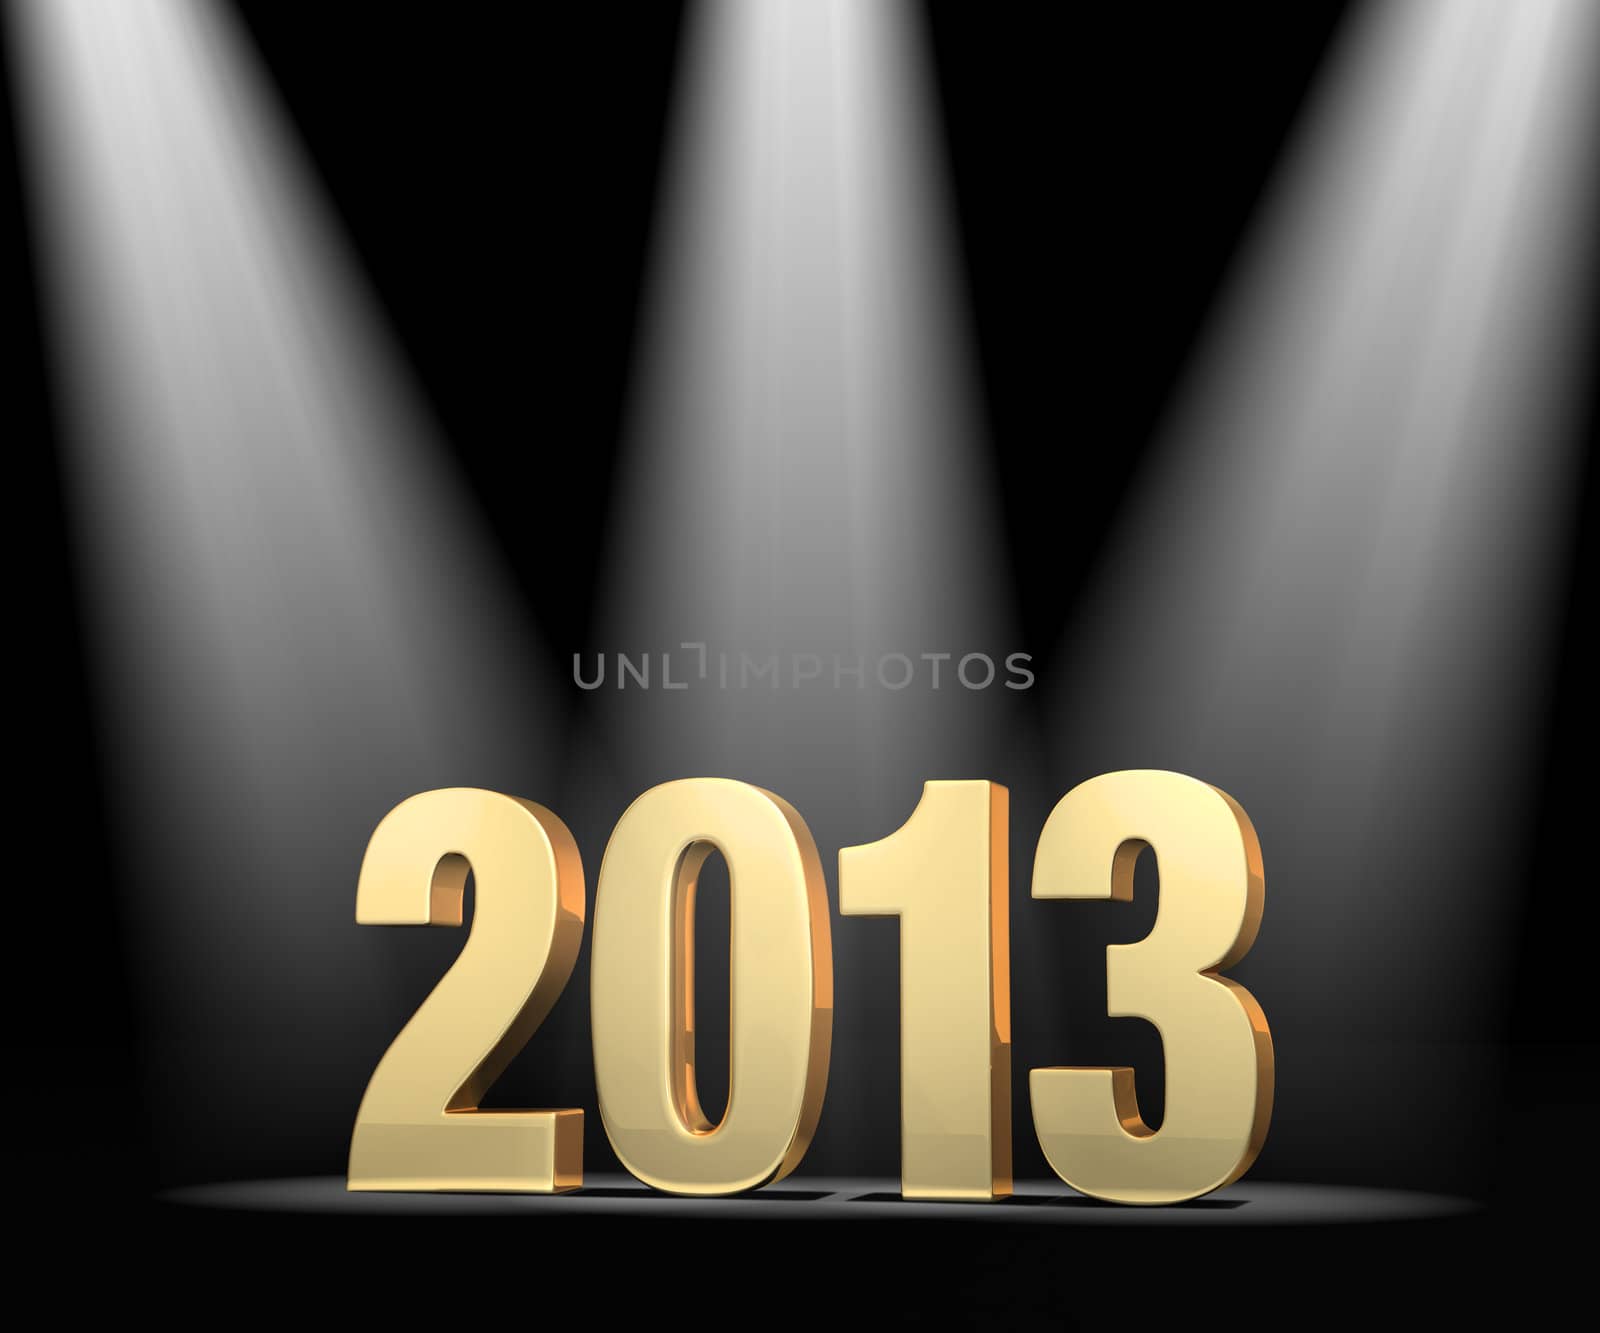 Spotlight on New Year 2013 by Em3